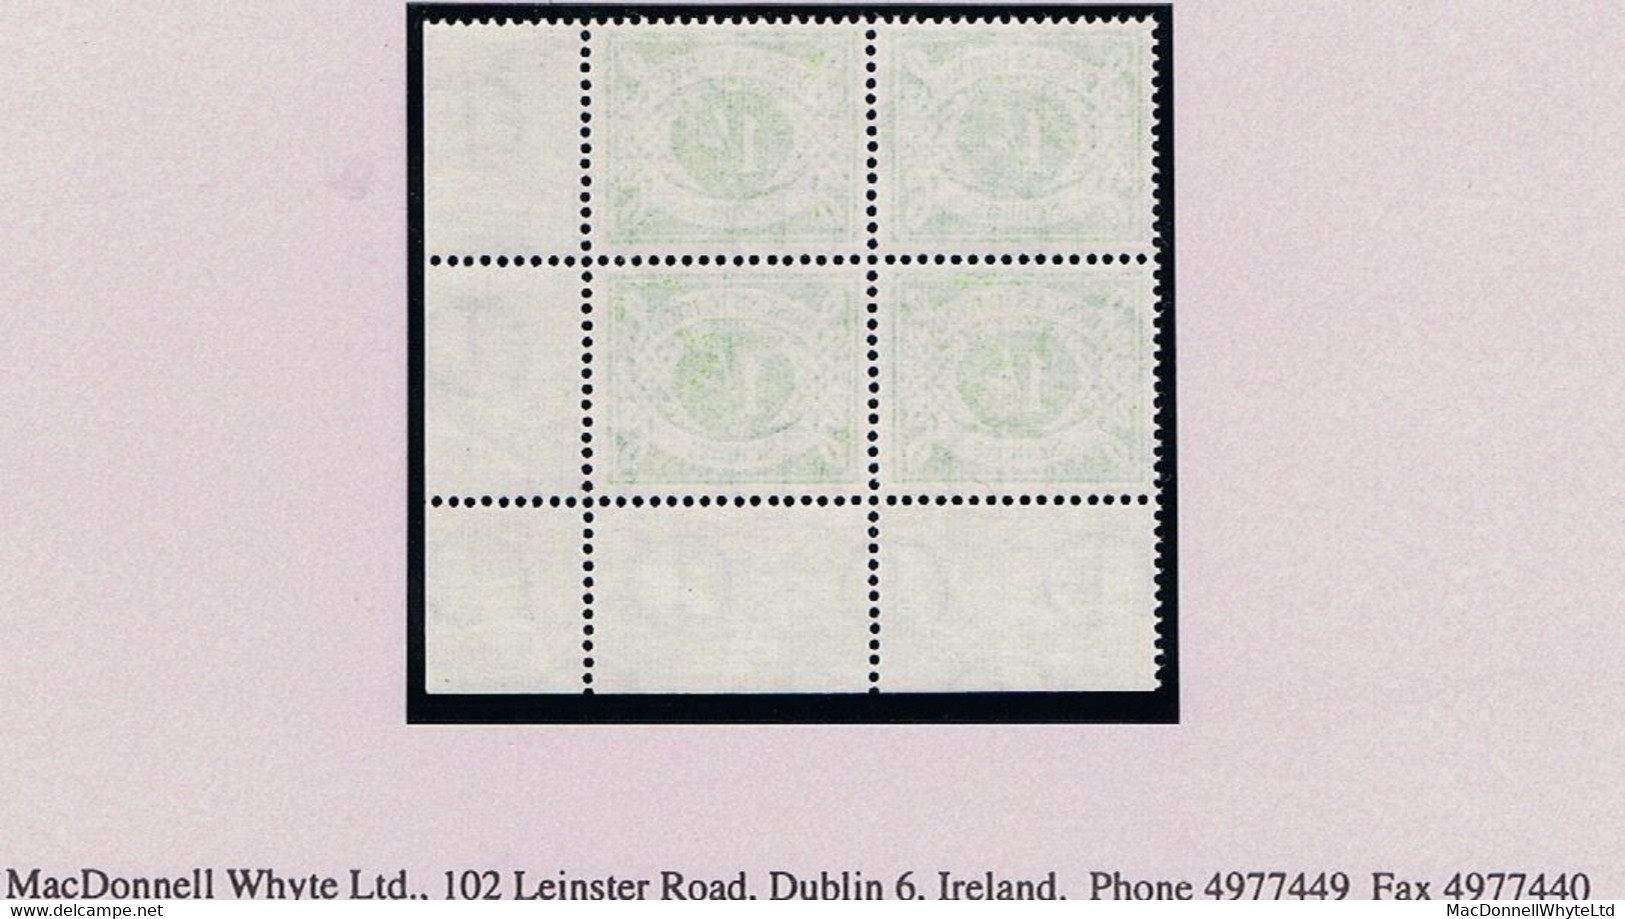 Ireland Postage Due 1940-69 E 1/- Green Watermark Sideways (reading Down) Corner Block Of 4 Mint Unmounted - Segnatasse